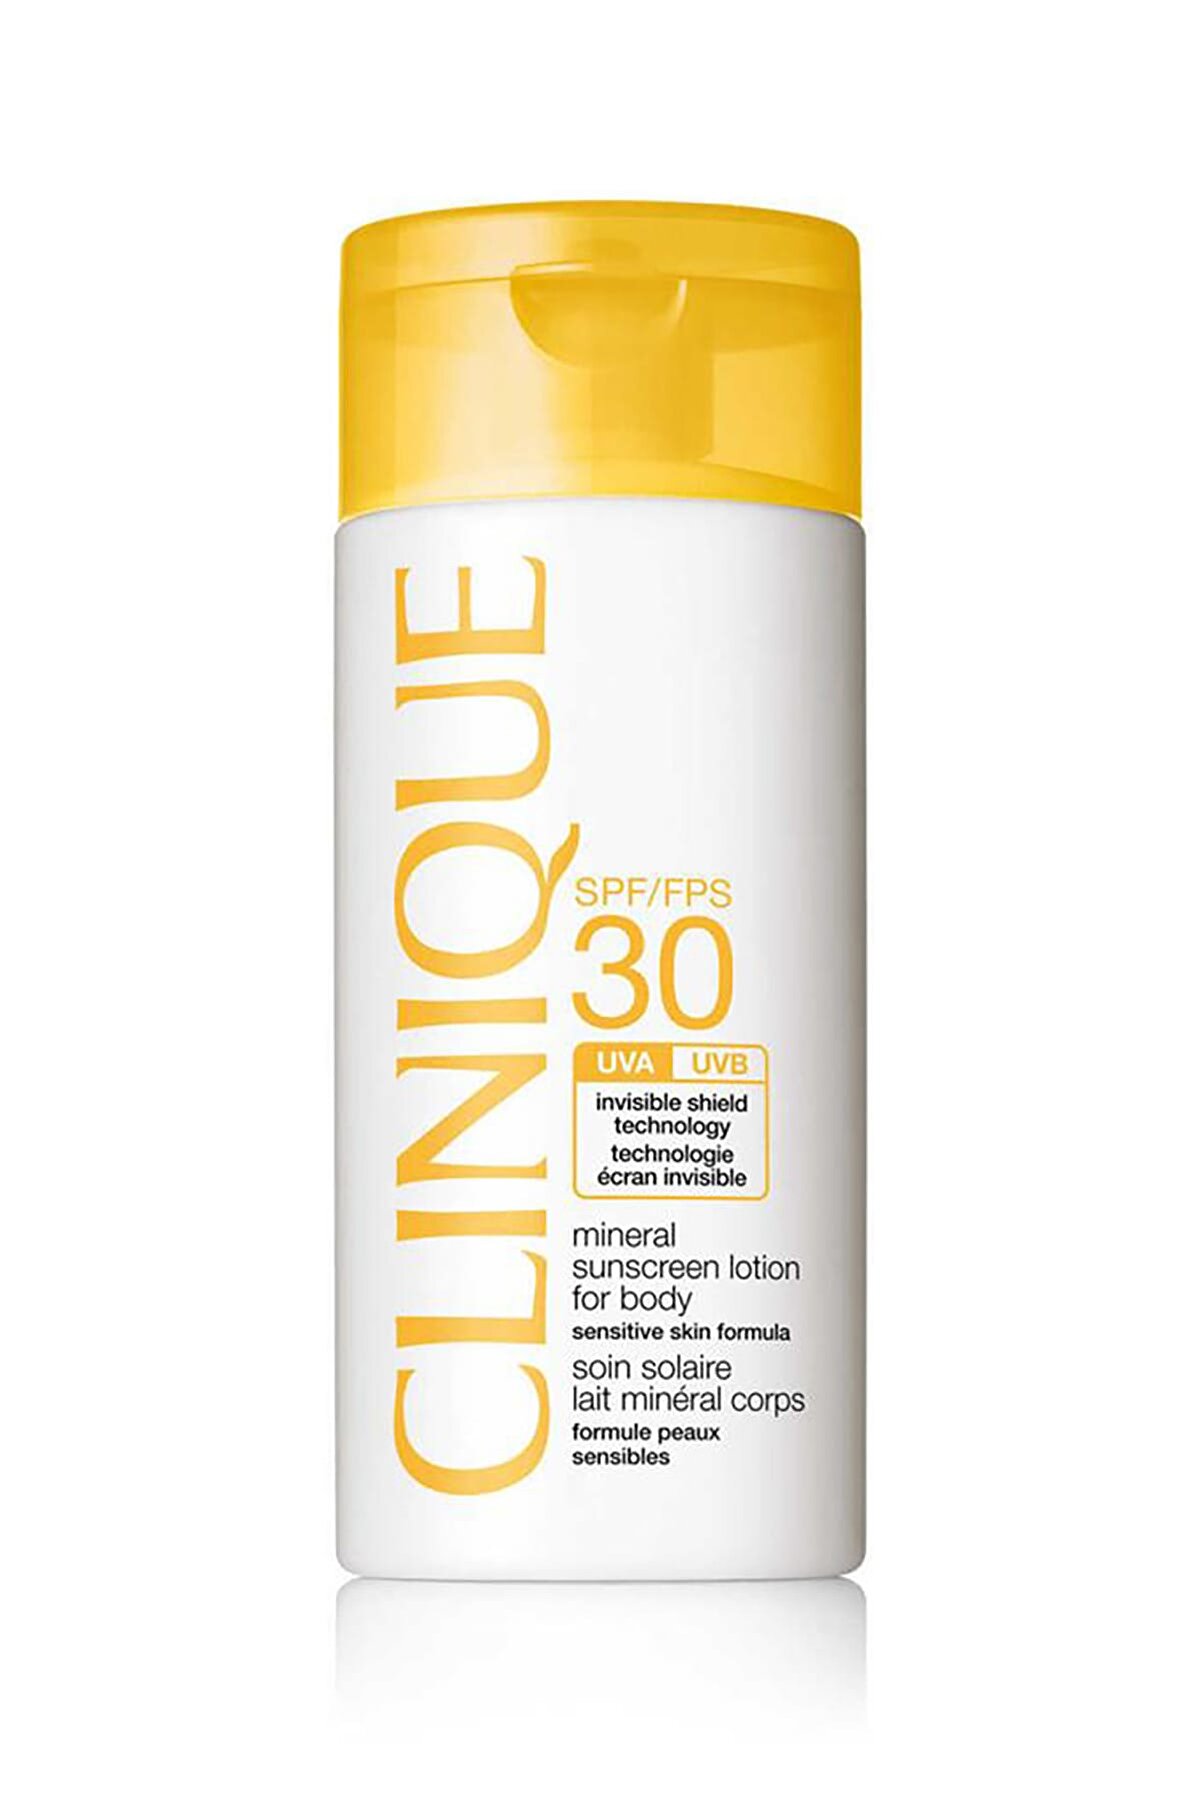 Clinique Vücut İçin Mineralli Güneş Kremi - SPF 30 Mineral Sunscreen Lotion For Body 125 ml 20714774127